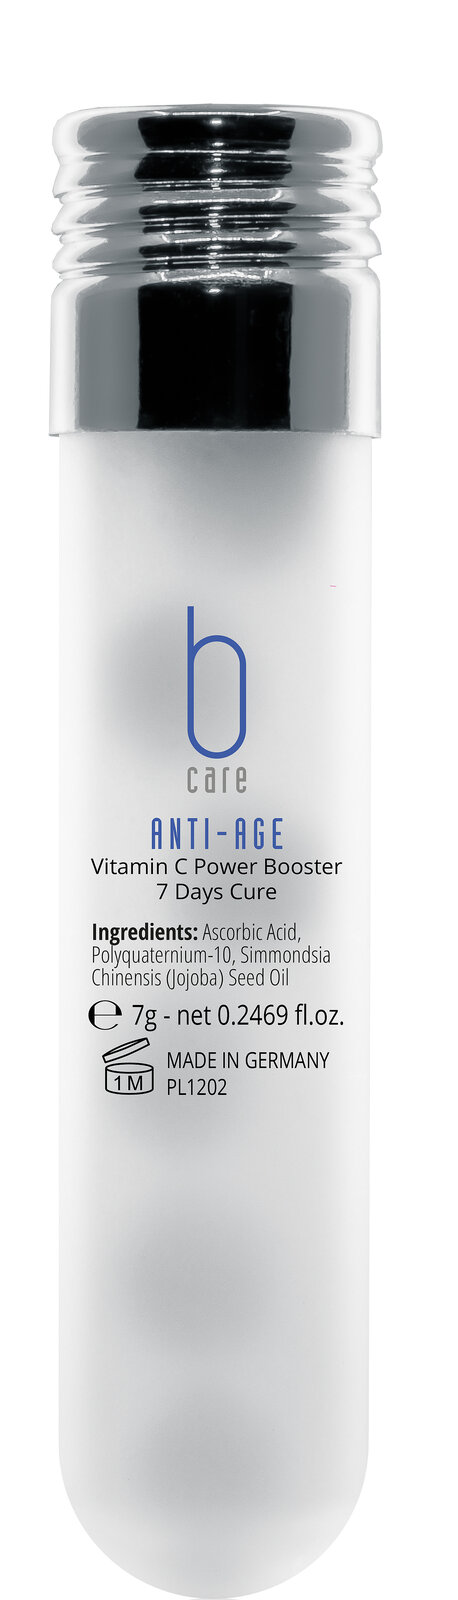 bcare_Anti_Age_Vitamin_C_Power_Booster.jpg